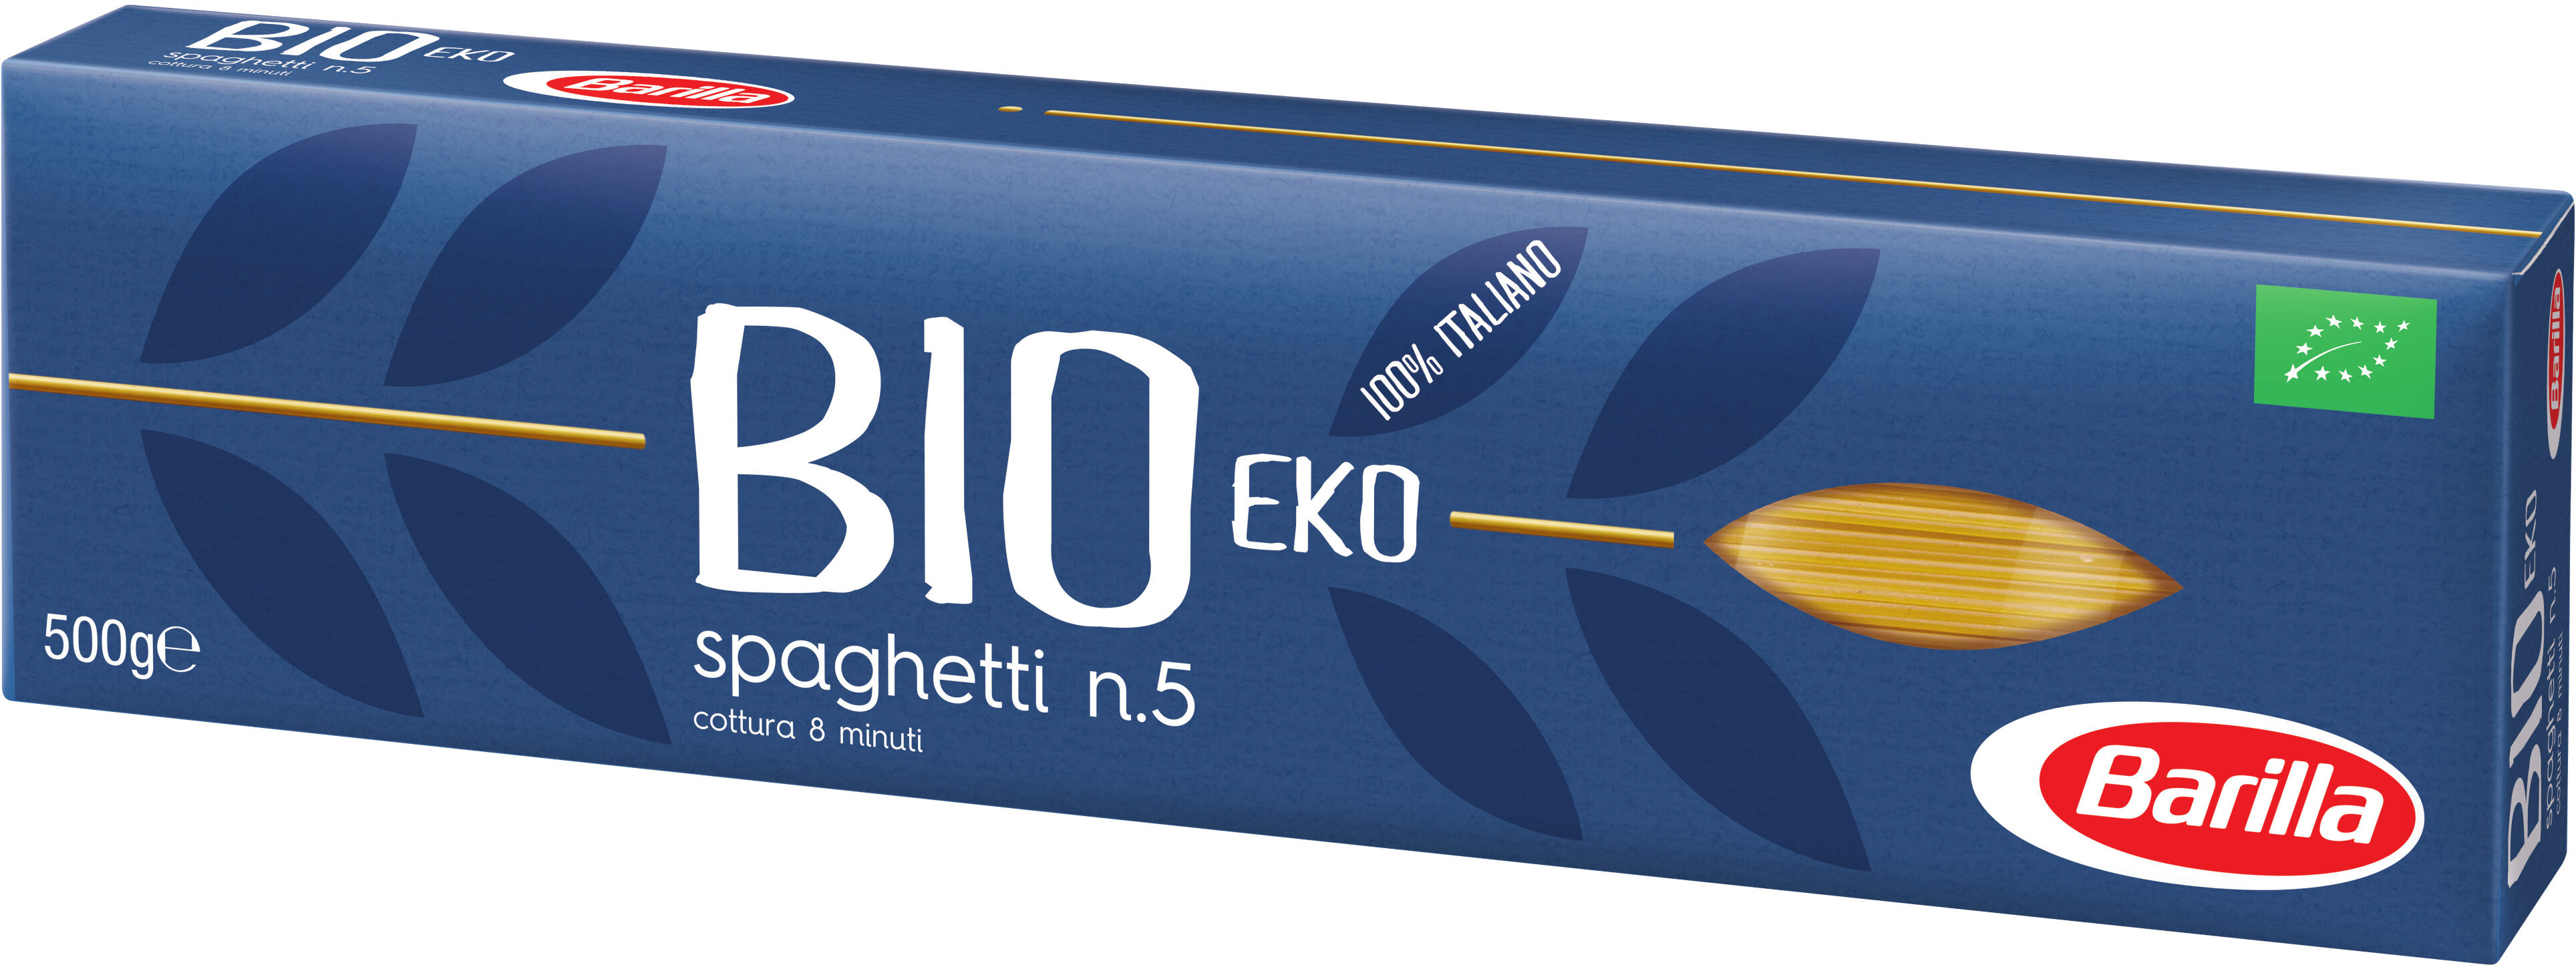 Barilla pates spaghetti bio 500g - Produit